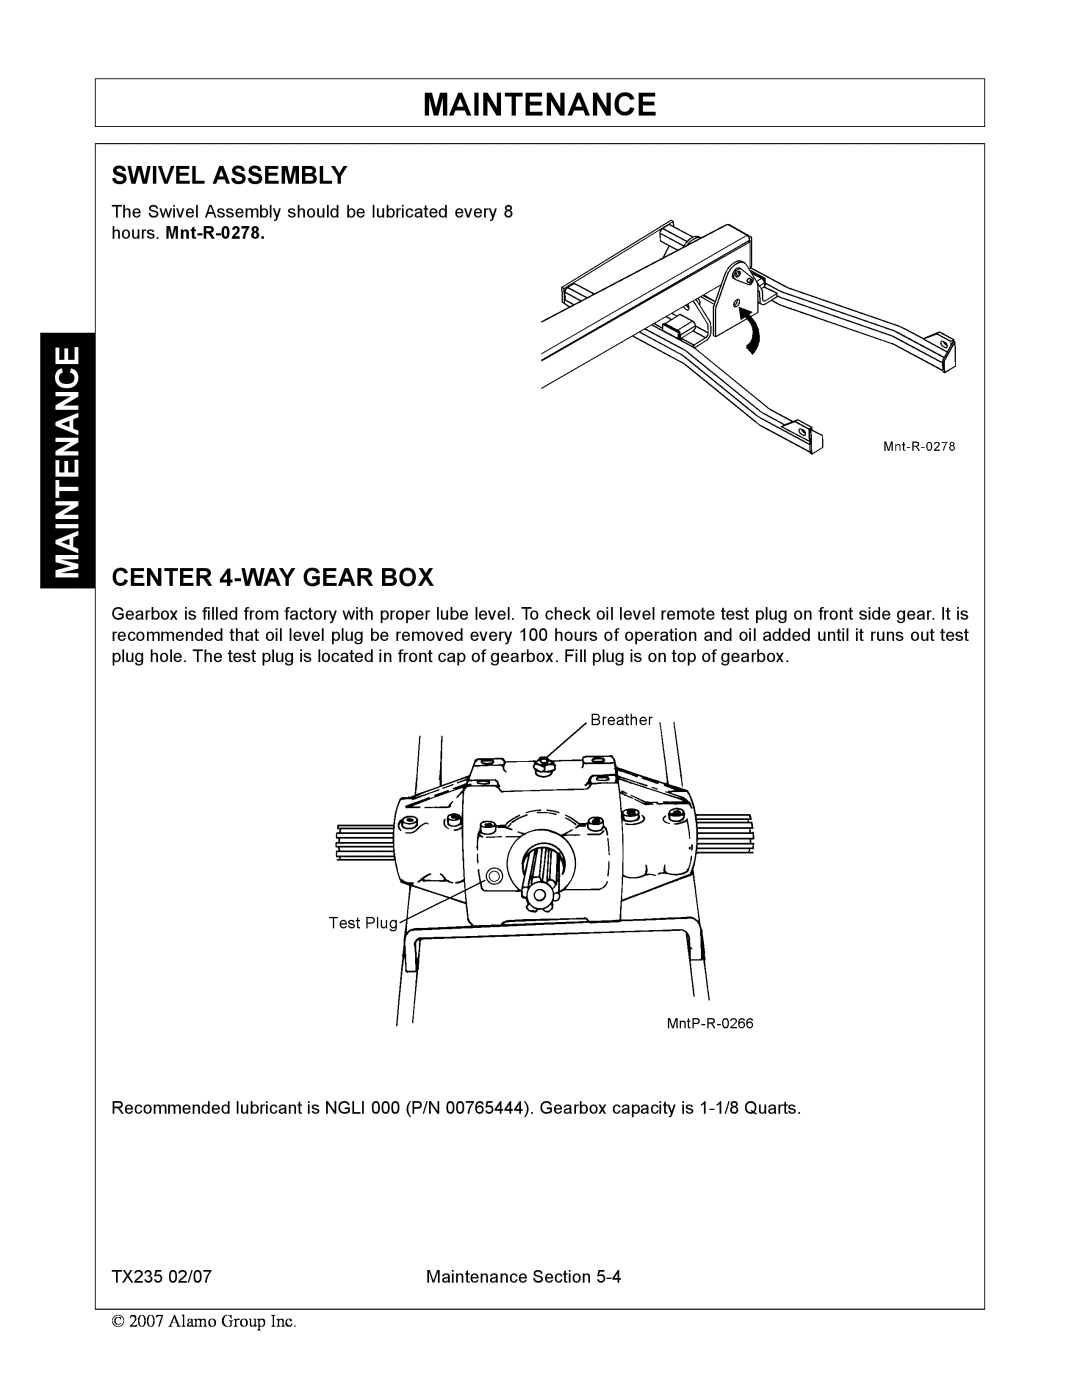 Alamo TX235 manual Swivel Assembly, CENTER 4-WAY GEAR BOX, Maintenance 